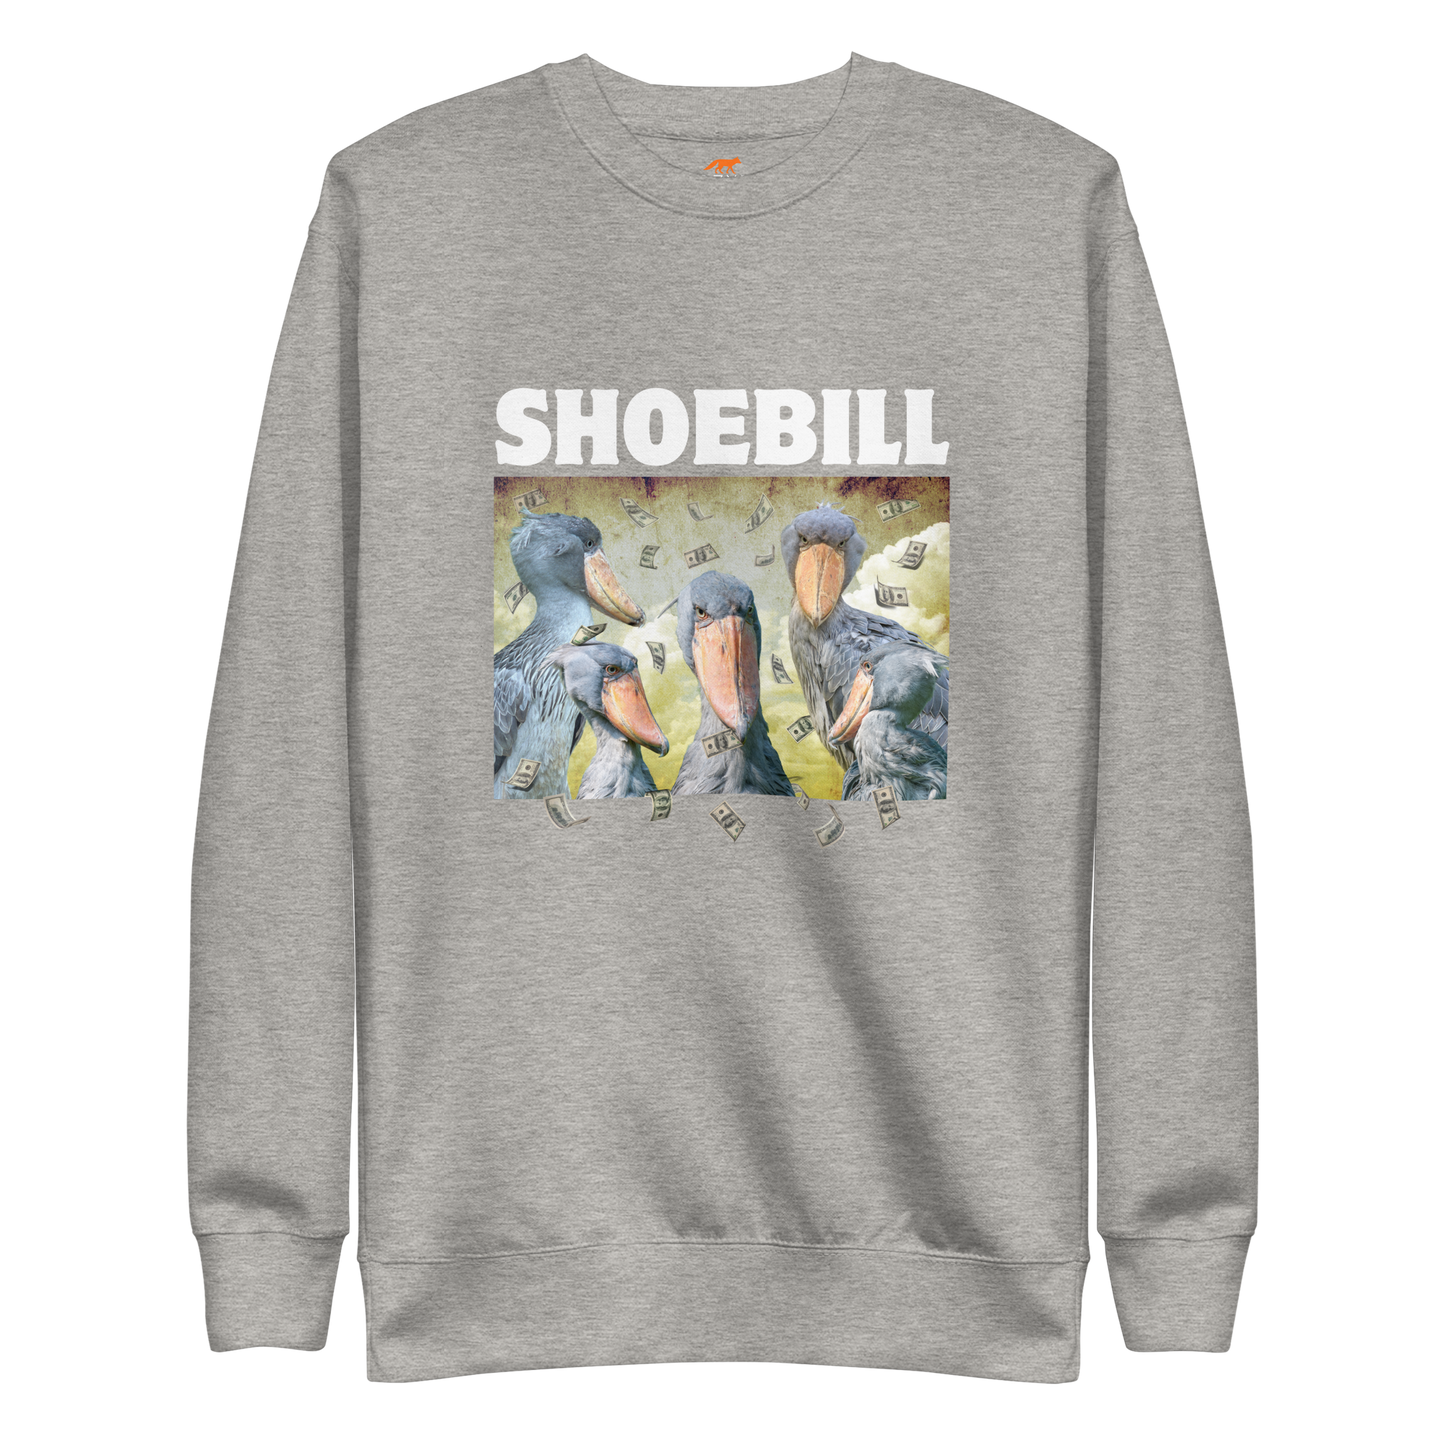 Carbon Grey Premium Shoebill Sweatshirt featuring a cool Shoebill graphic on the chest - Artsy/Funny Graphic Shoebill Stork Sweatshirts - Boozy Fox